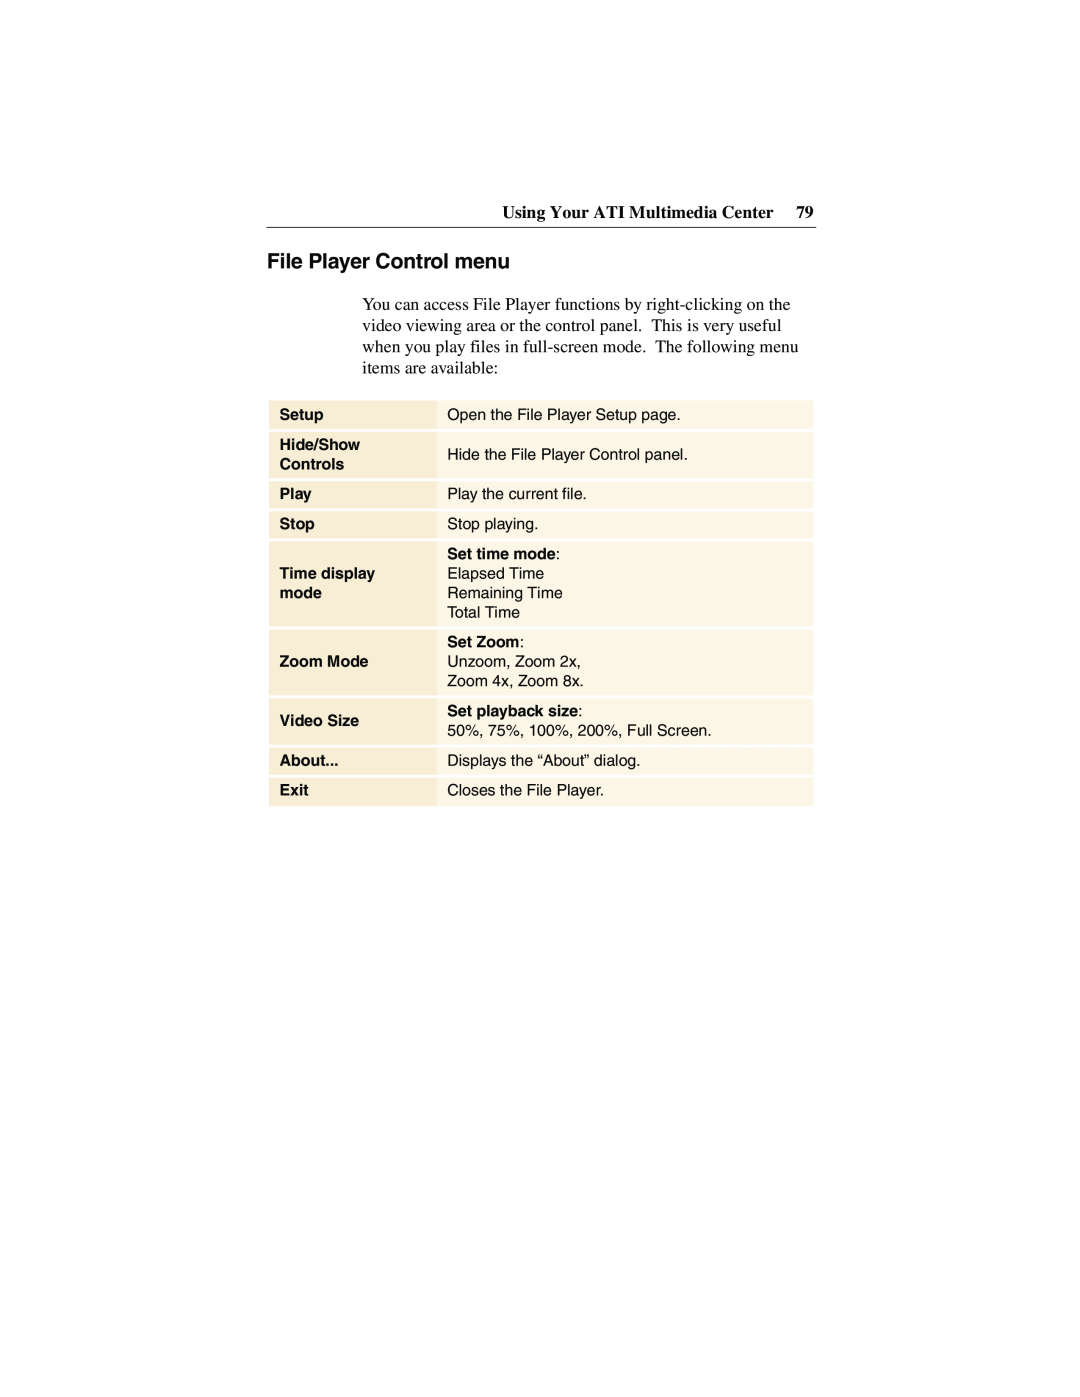 ATI Technologies 137-40188-60 specifications File Player Control menu, Using Your ATI Multimedia Center 